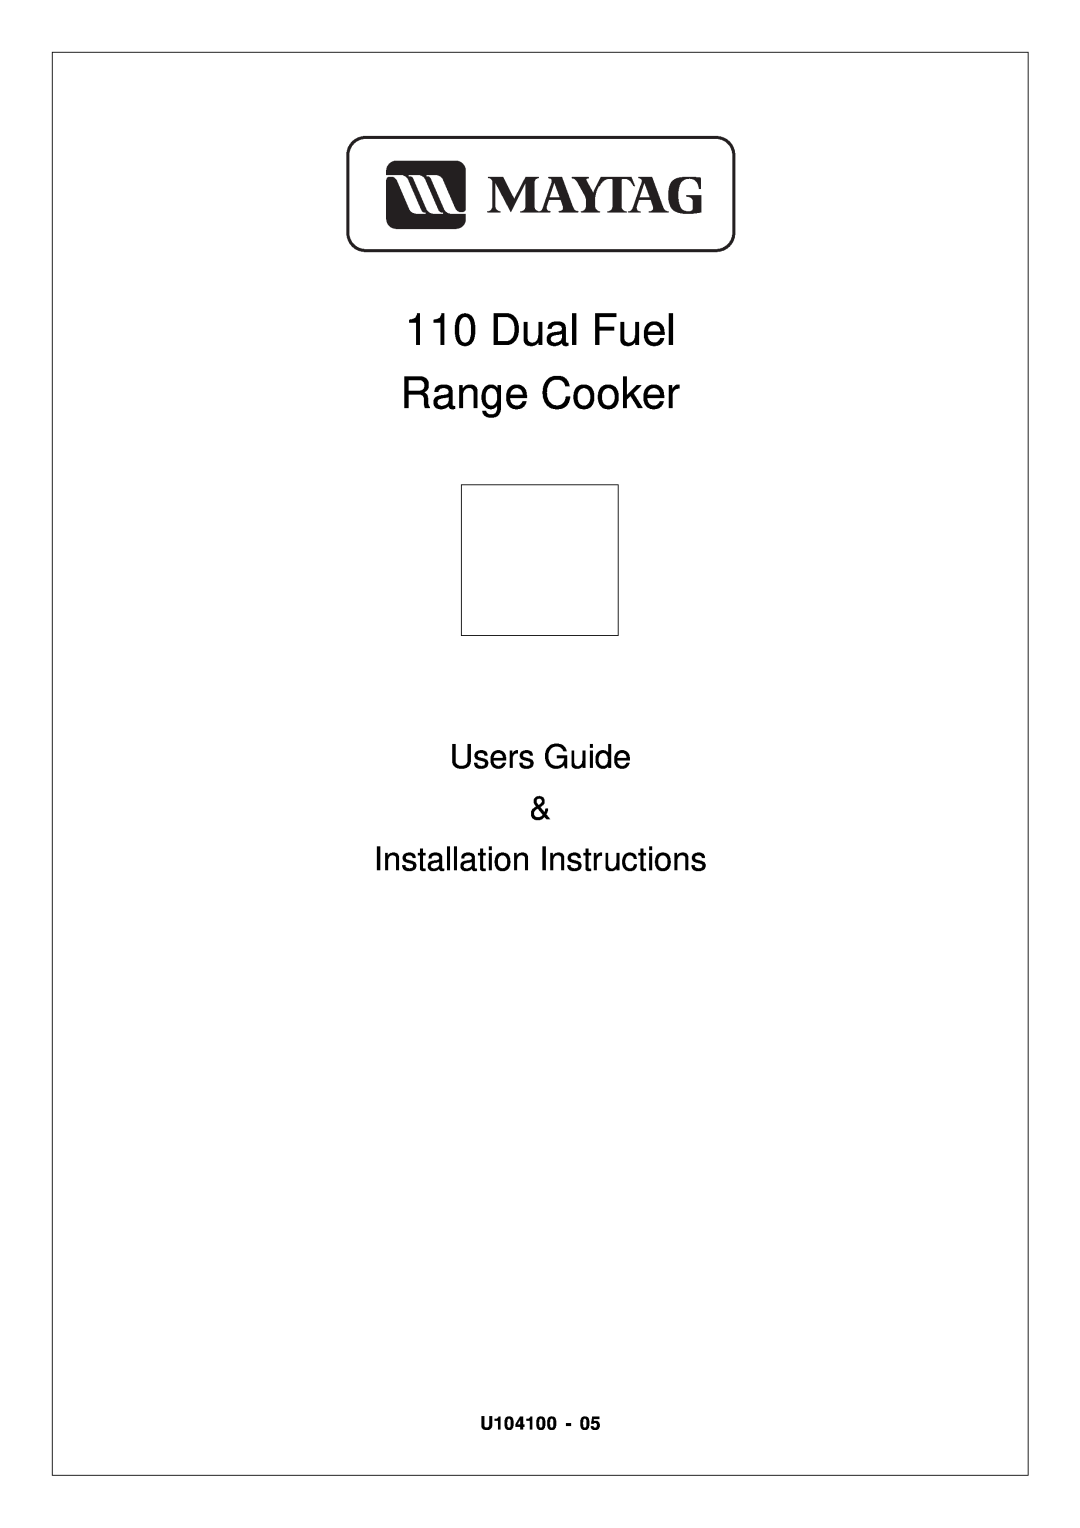 Maytag user manual MAYTAG 110 DUAL FUEL RANGE COOKER 